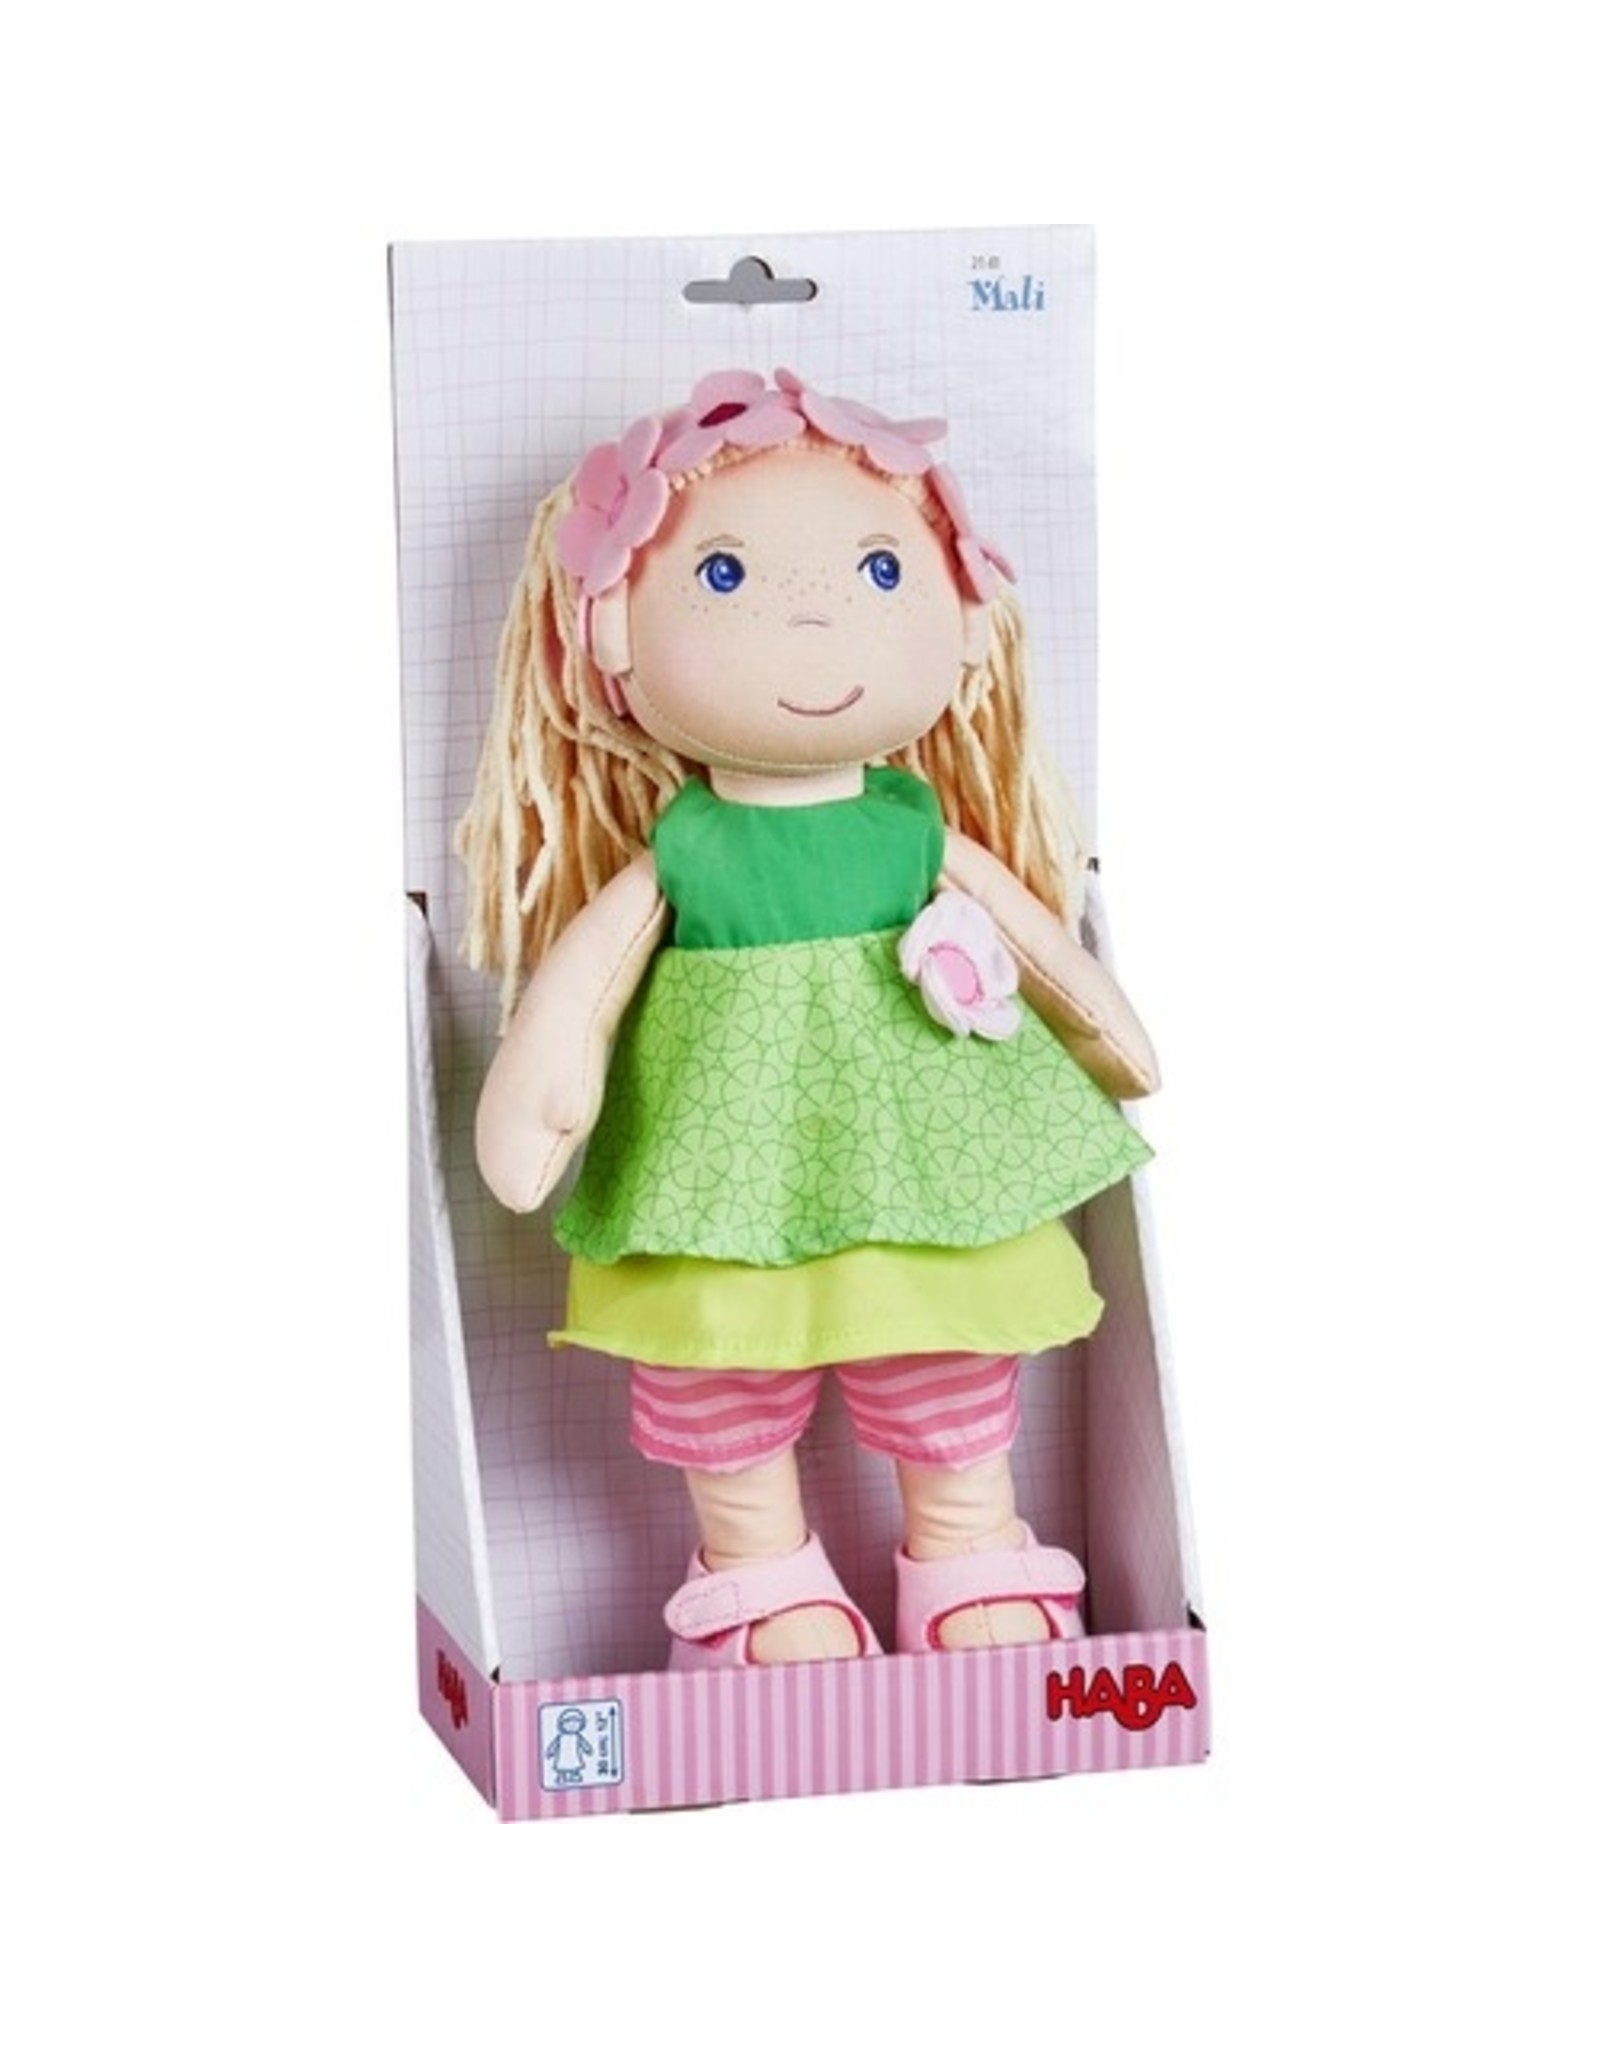 12" Mali Doll